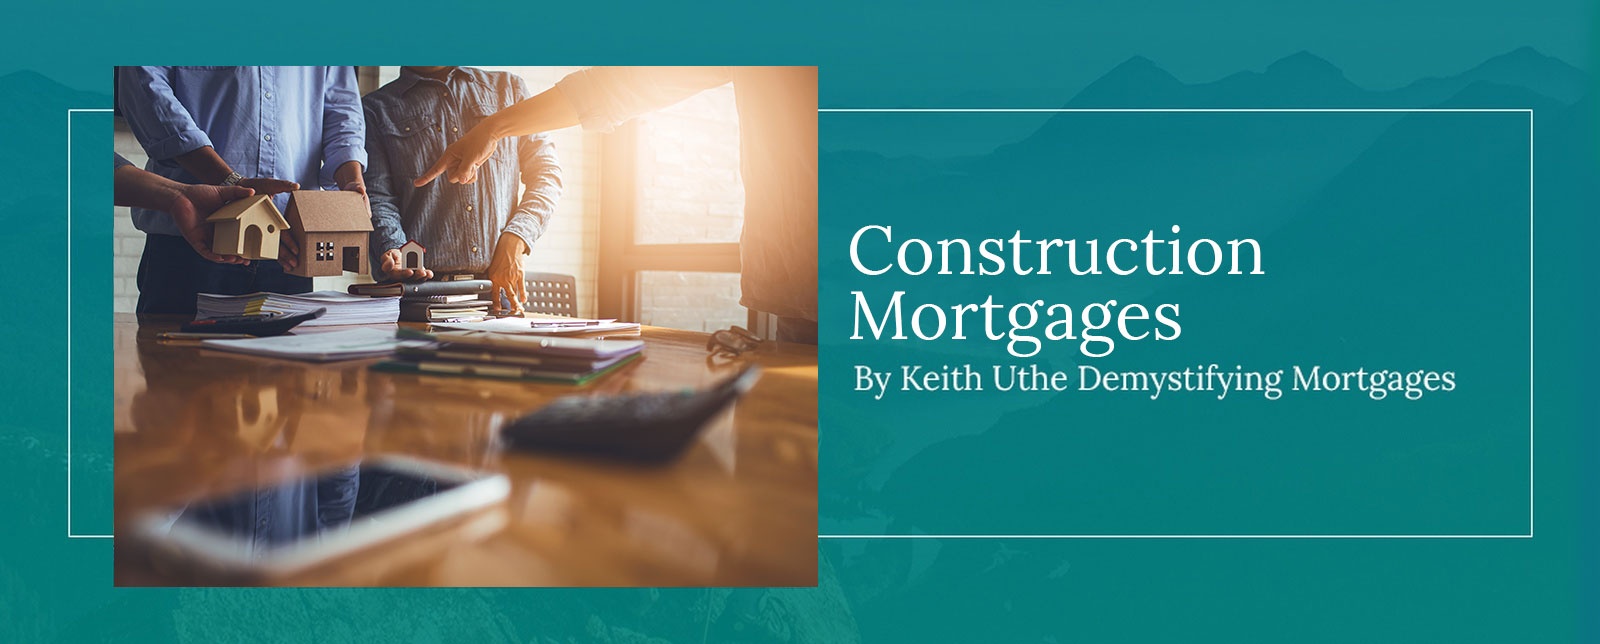 Keith Uthe - Mortgage Specialist in Calgary, Alberta 